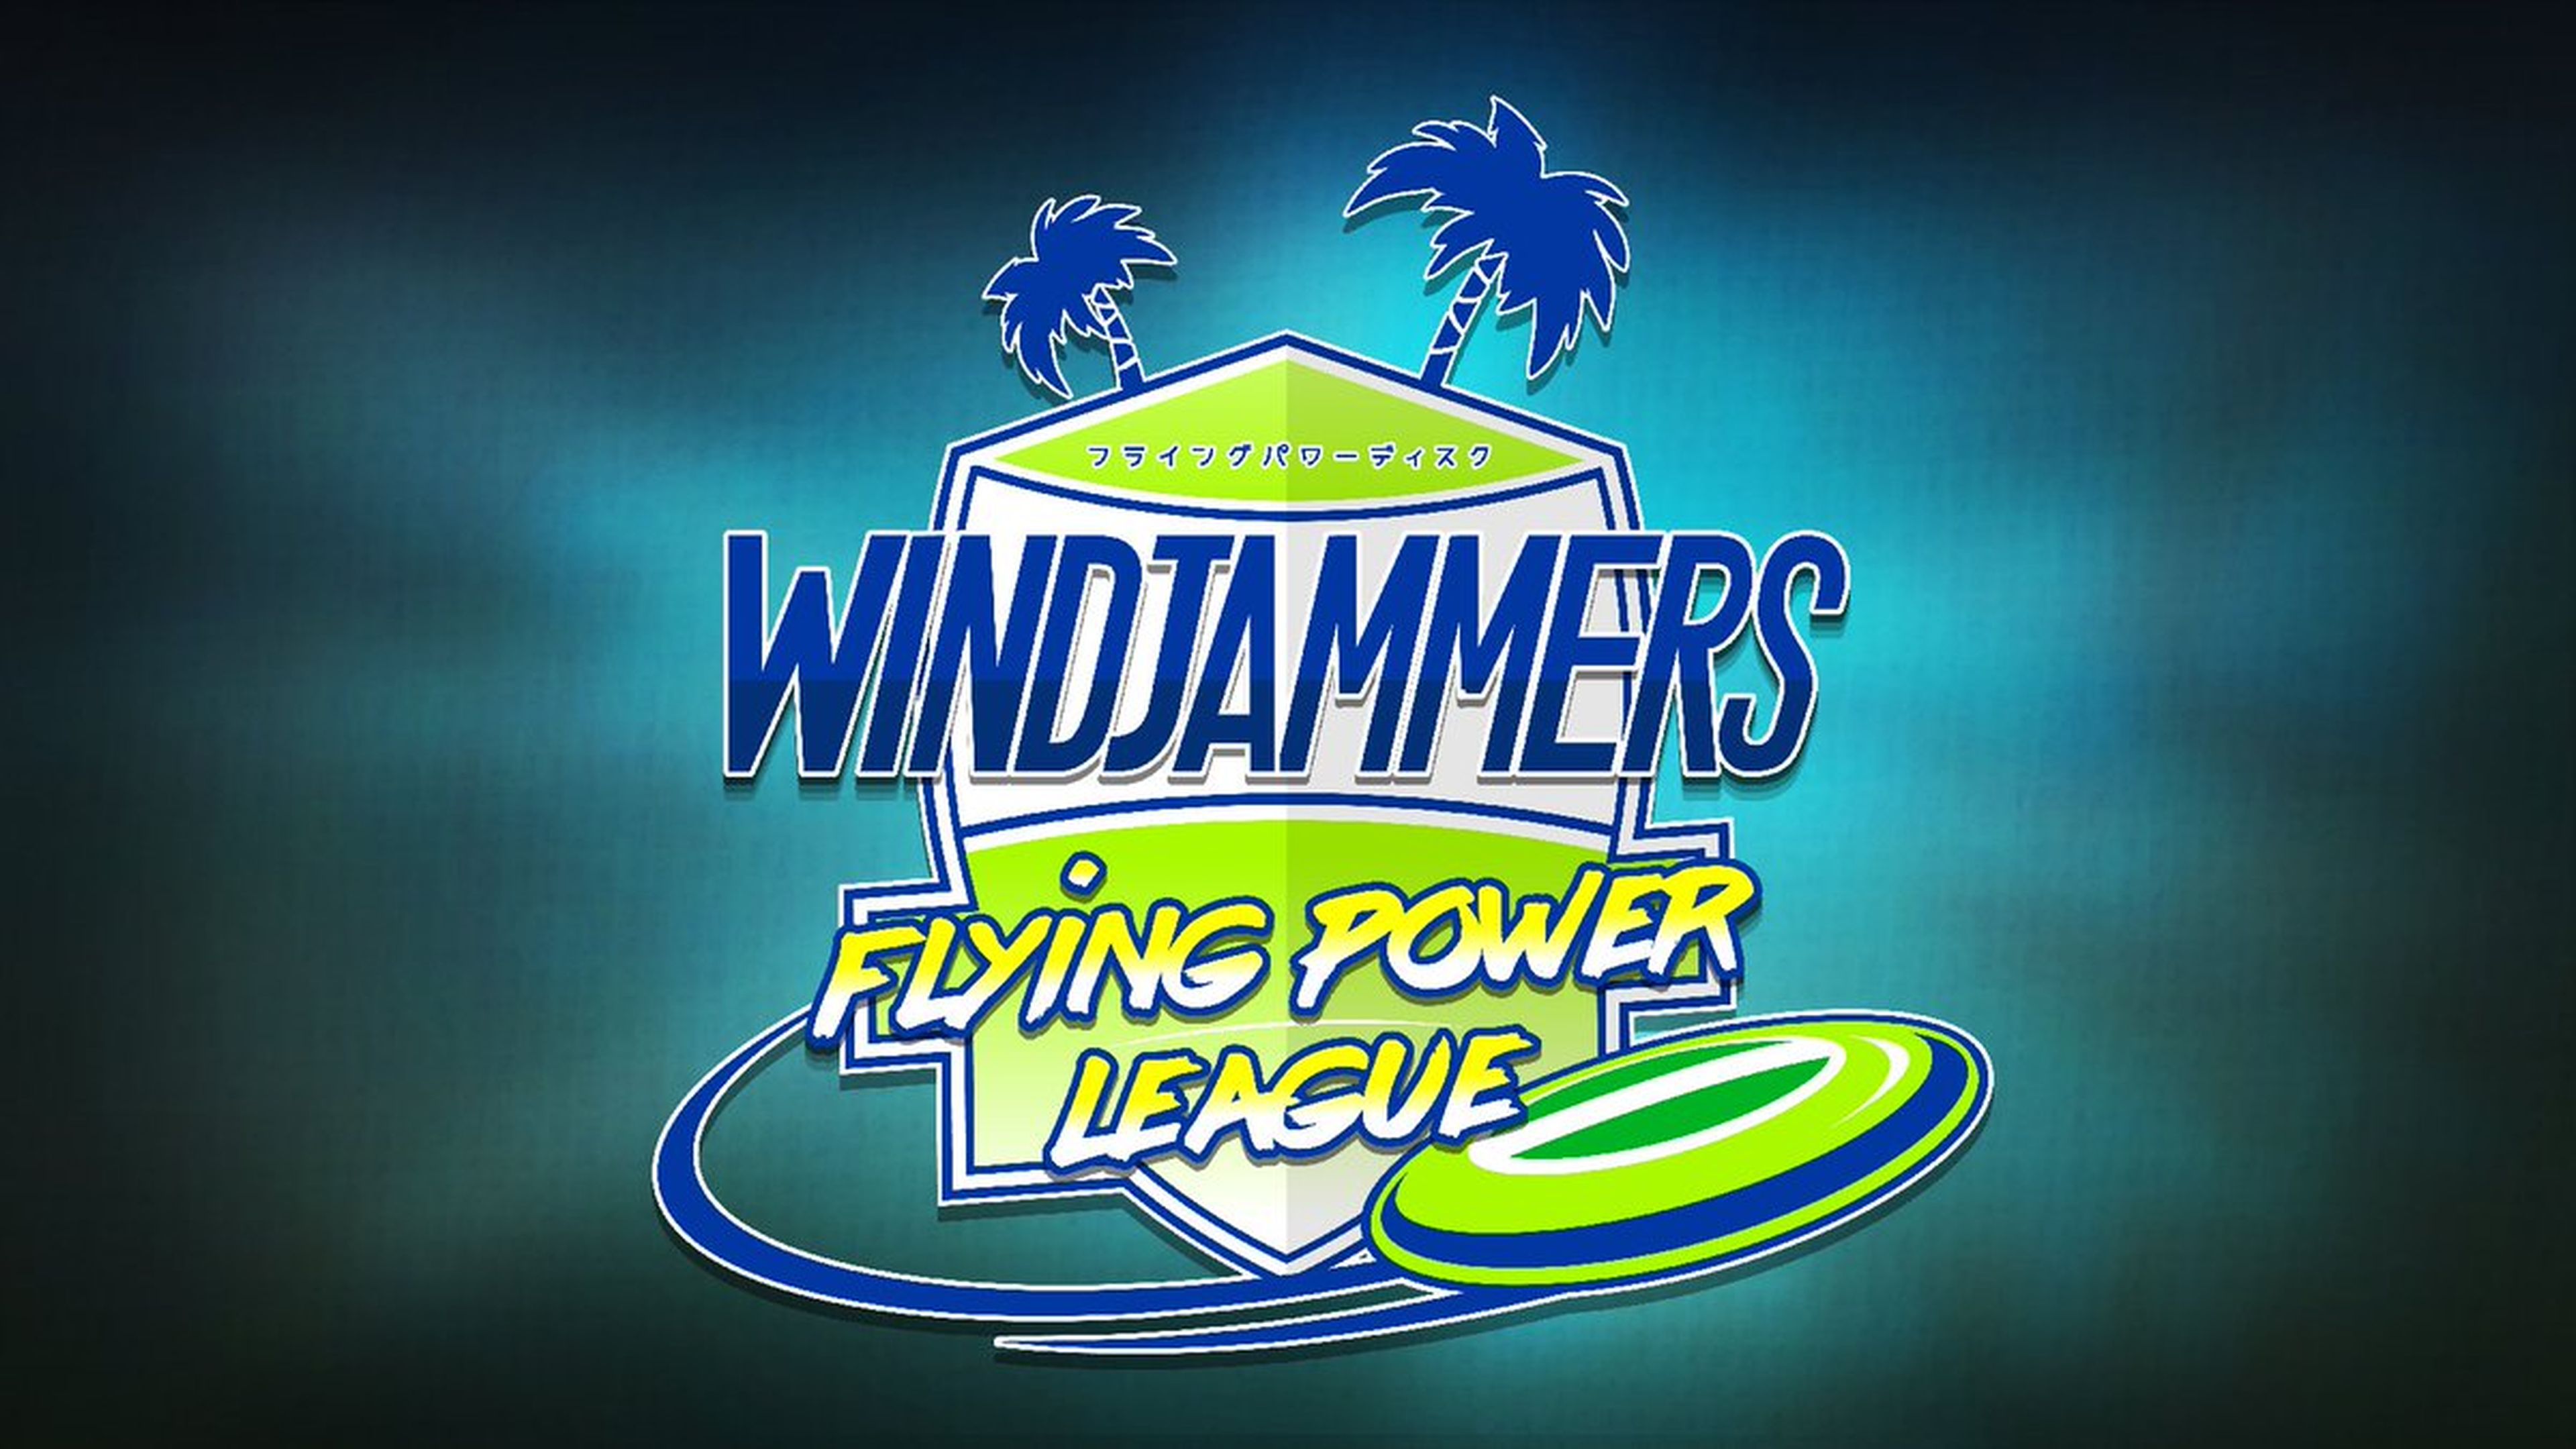 Windjammers esports